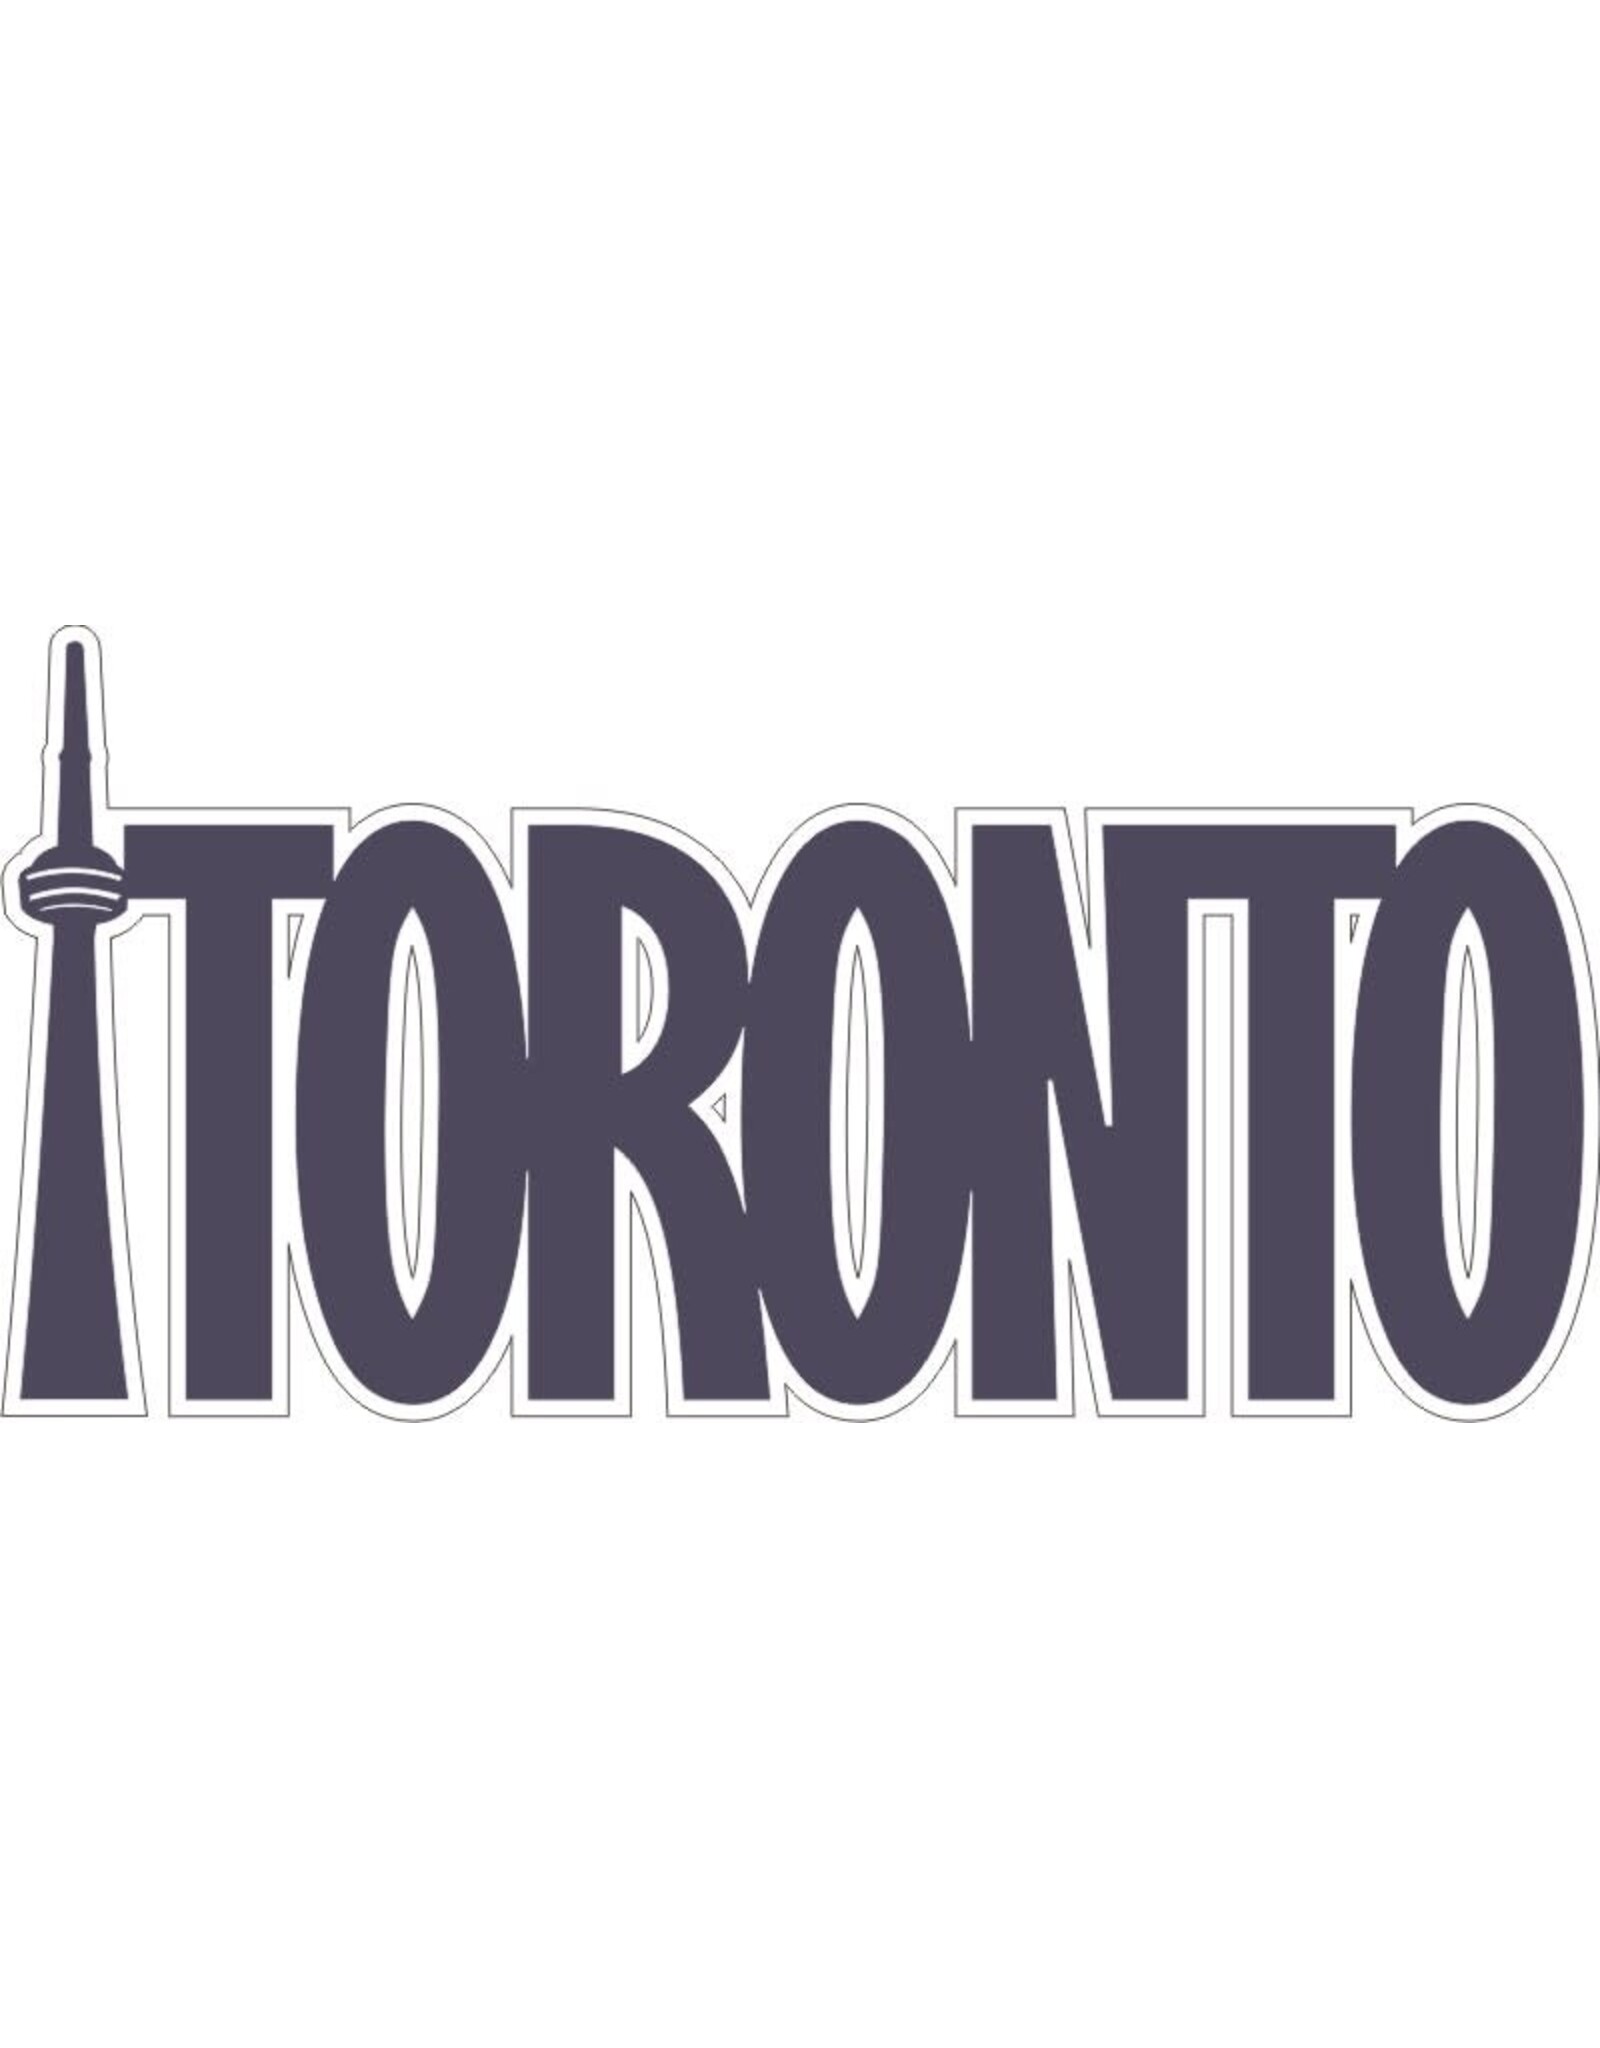 Toronto banner